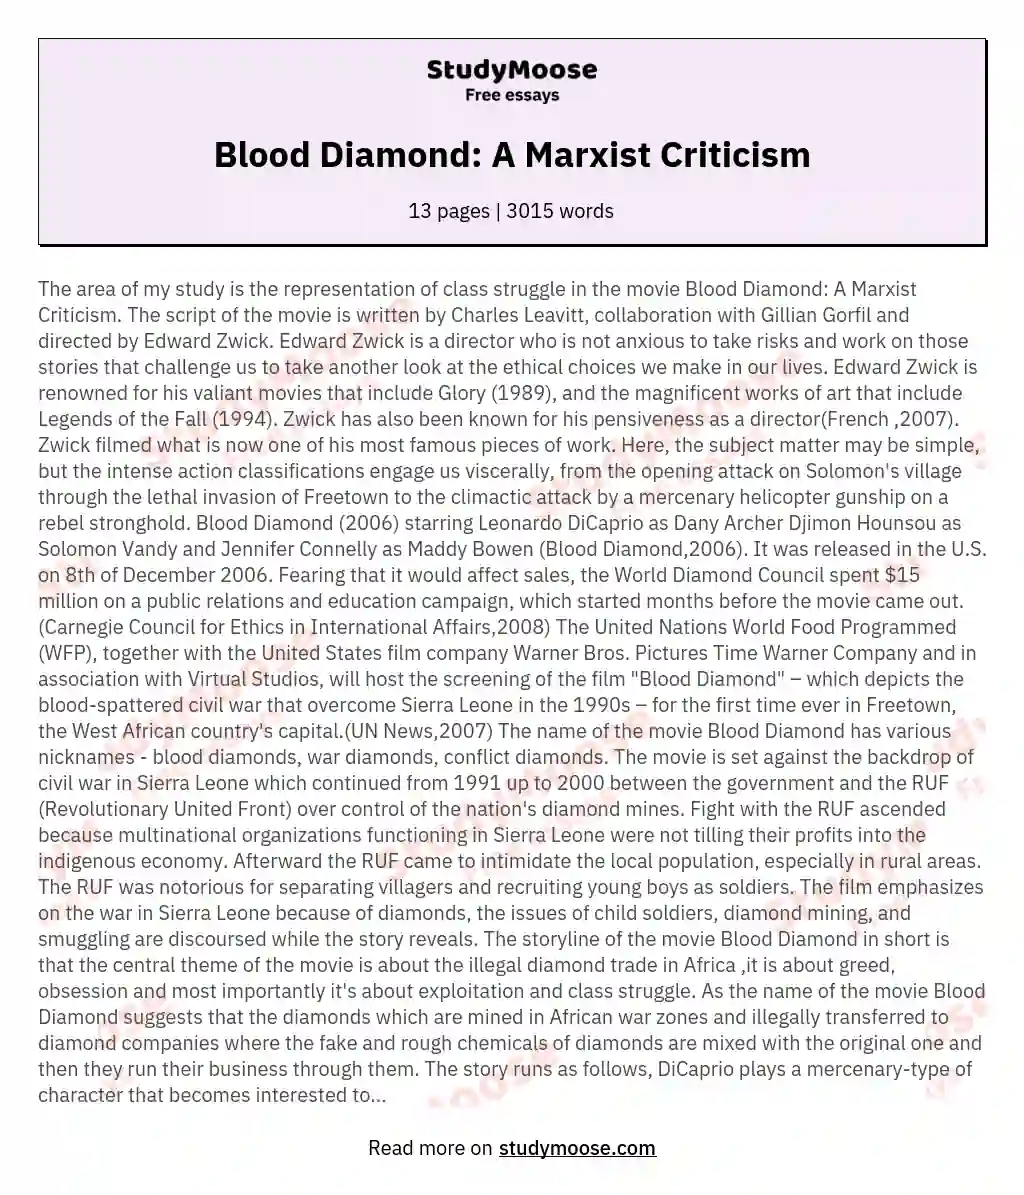 Blood Diamond: A Marxist Criticism